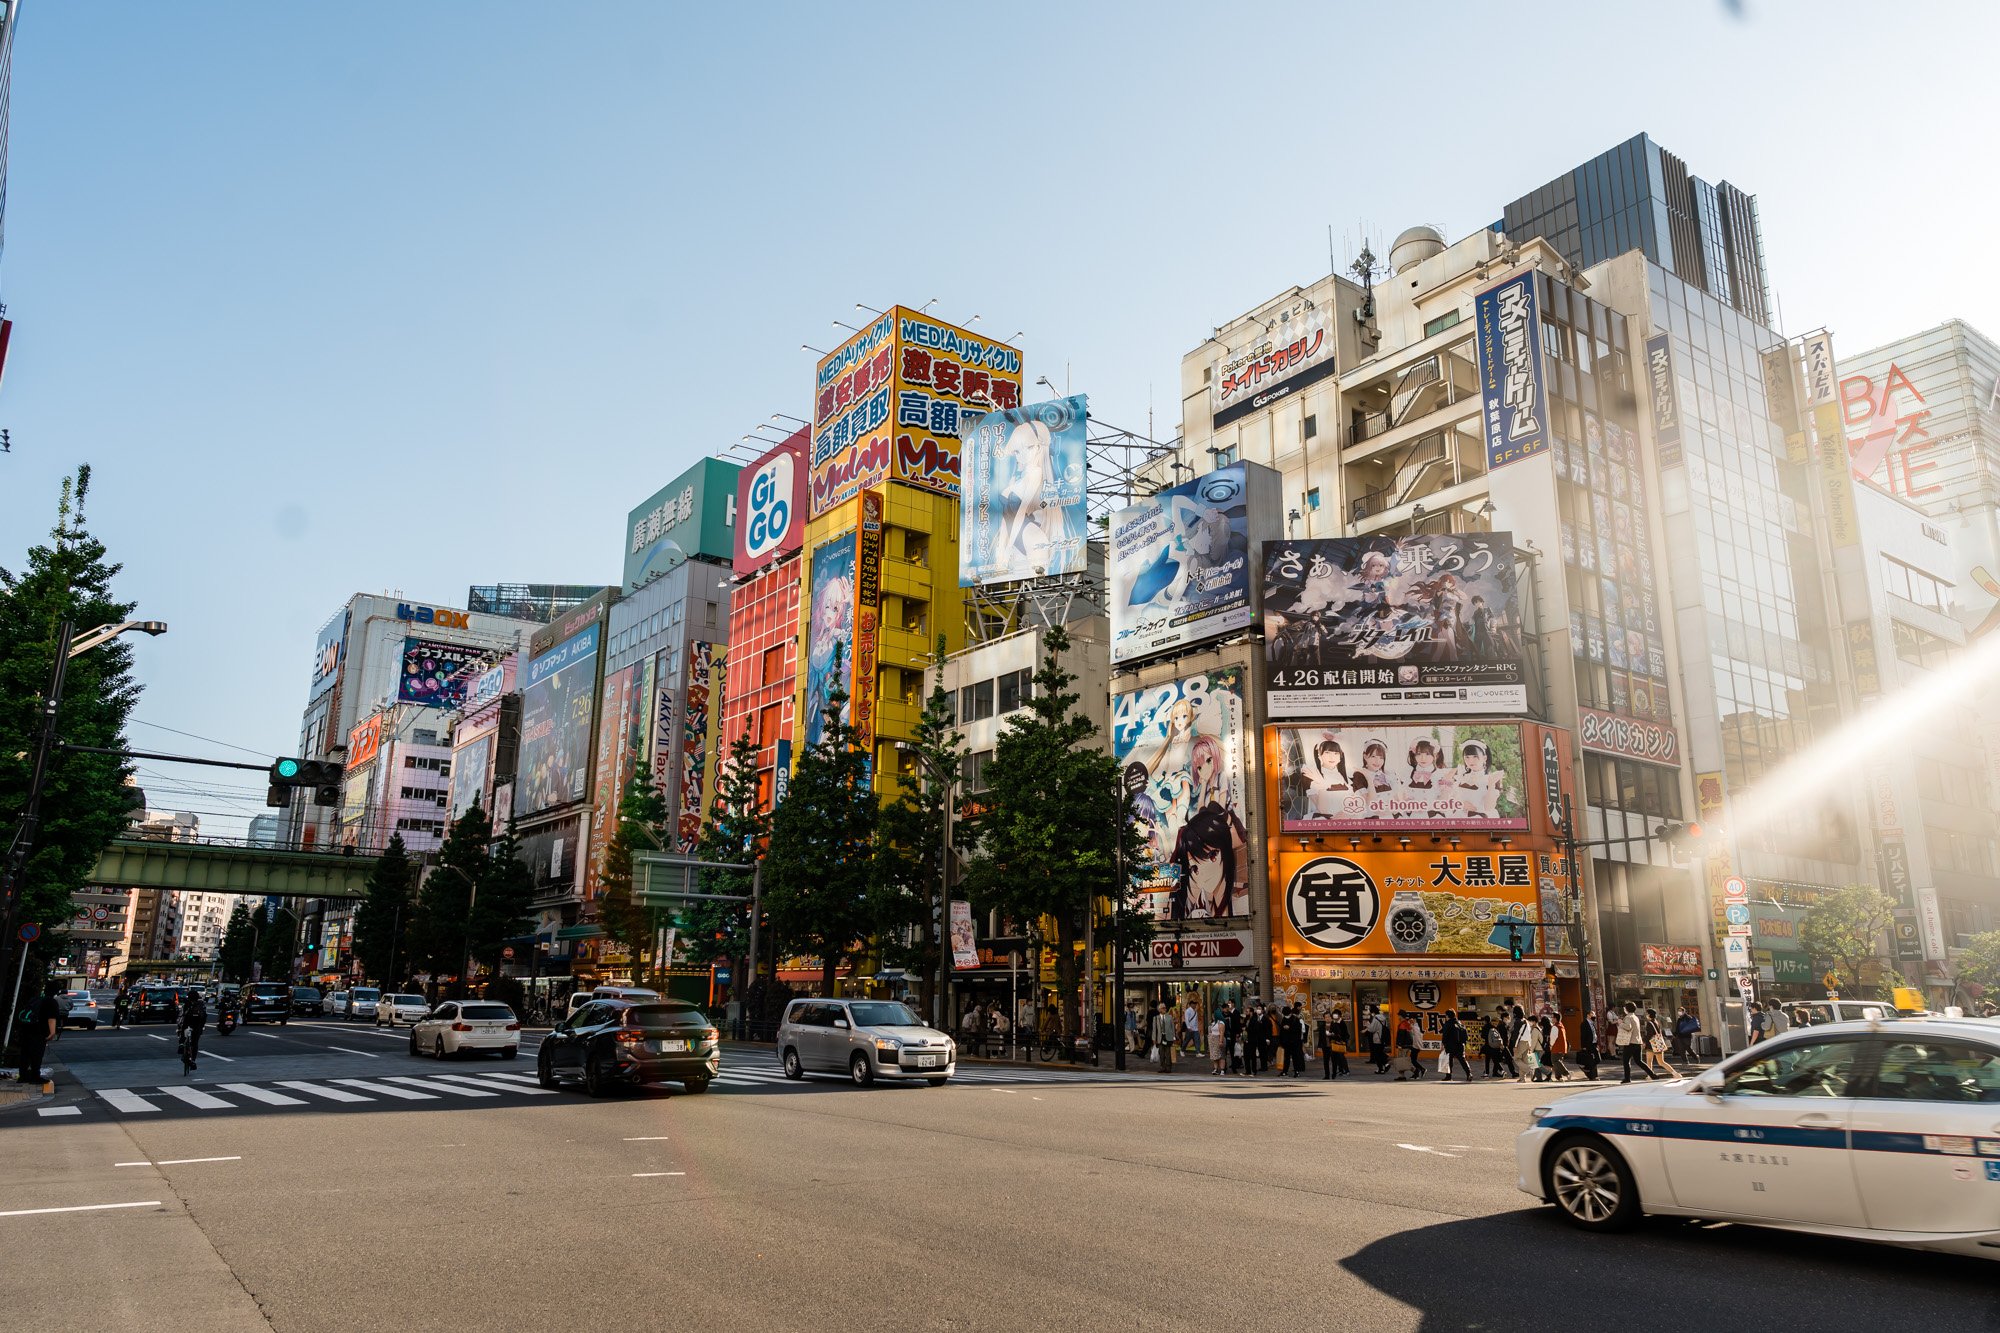 10 Best Anime Shops in Tokyo | Japan Wonder Travel Blog